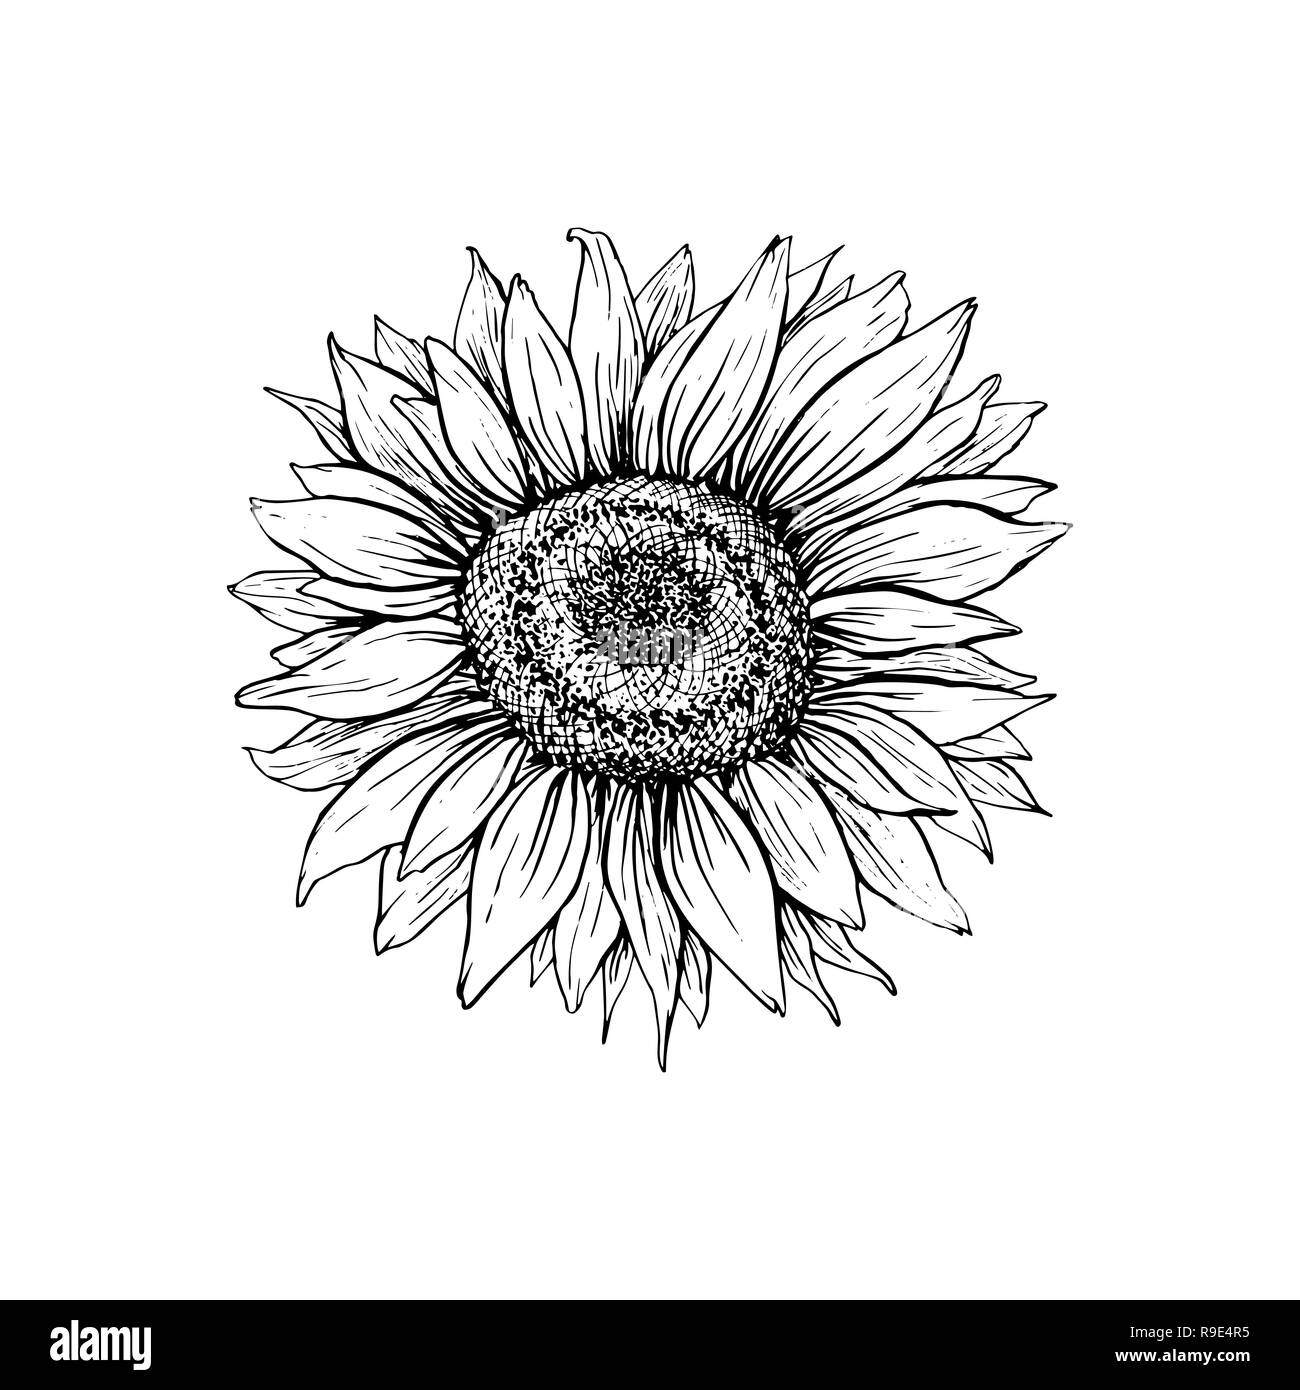 Sunflower hand drawn vector illustration. 